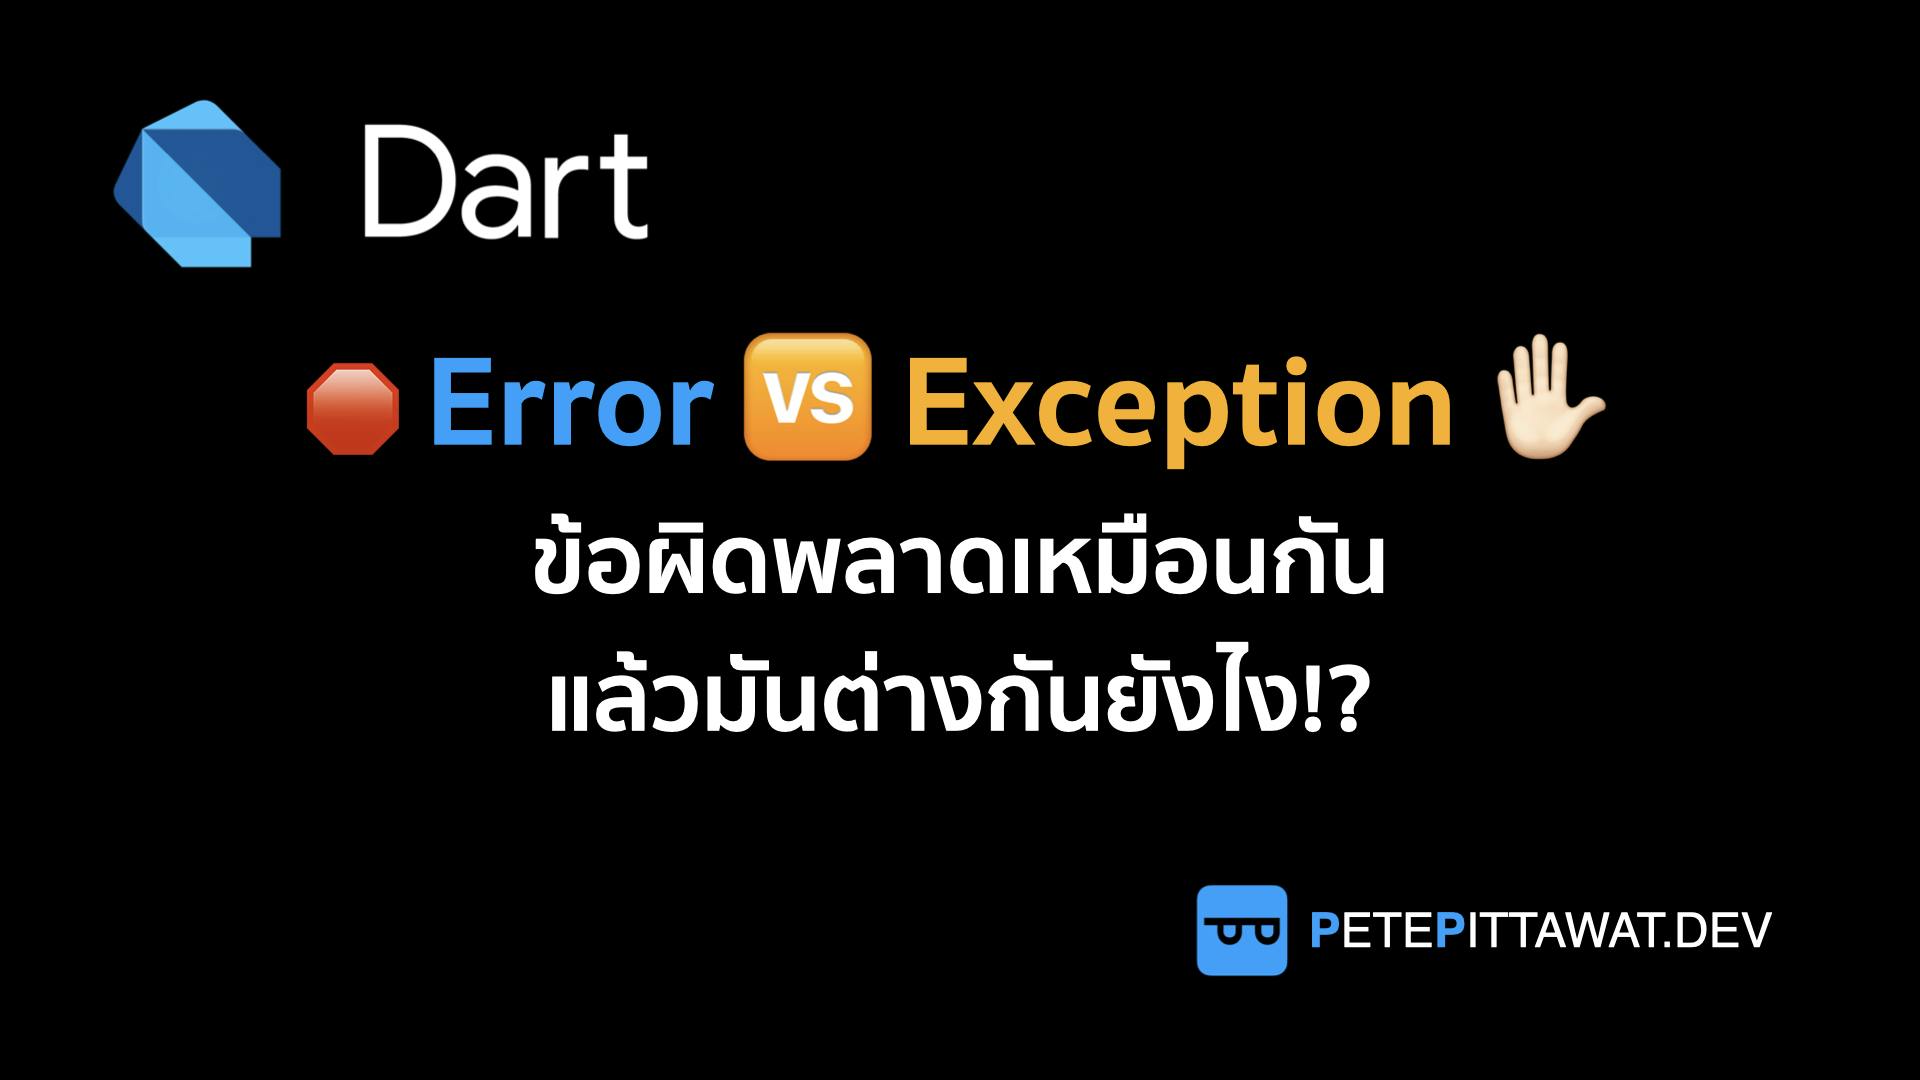 Cover Image for Dart: Exception VS Error